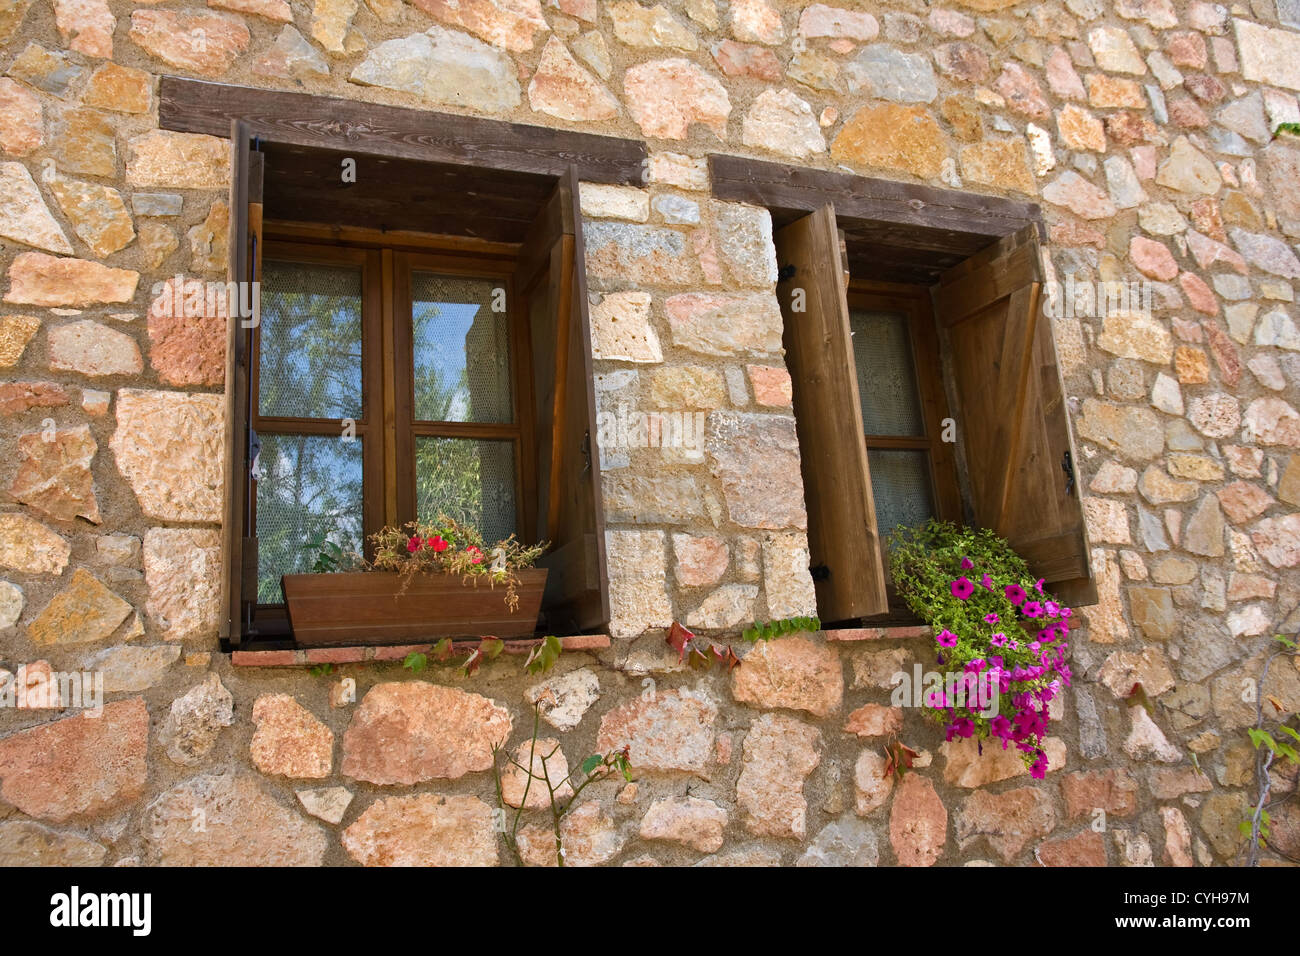 Wooden framed windows in stone wall, Siurana, Catalunya, Spain Stock Photo